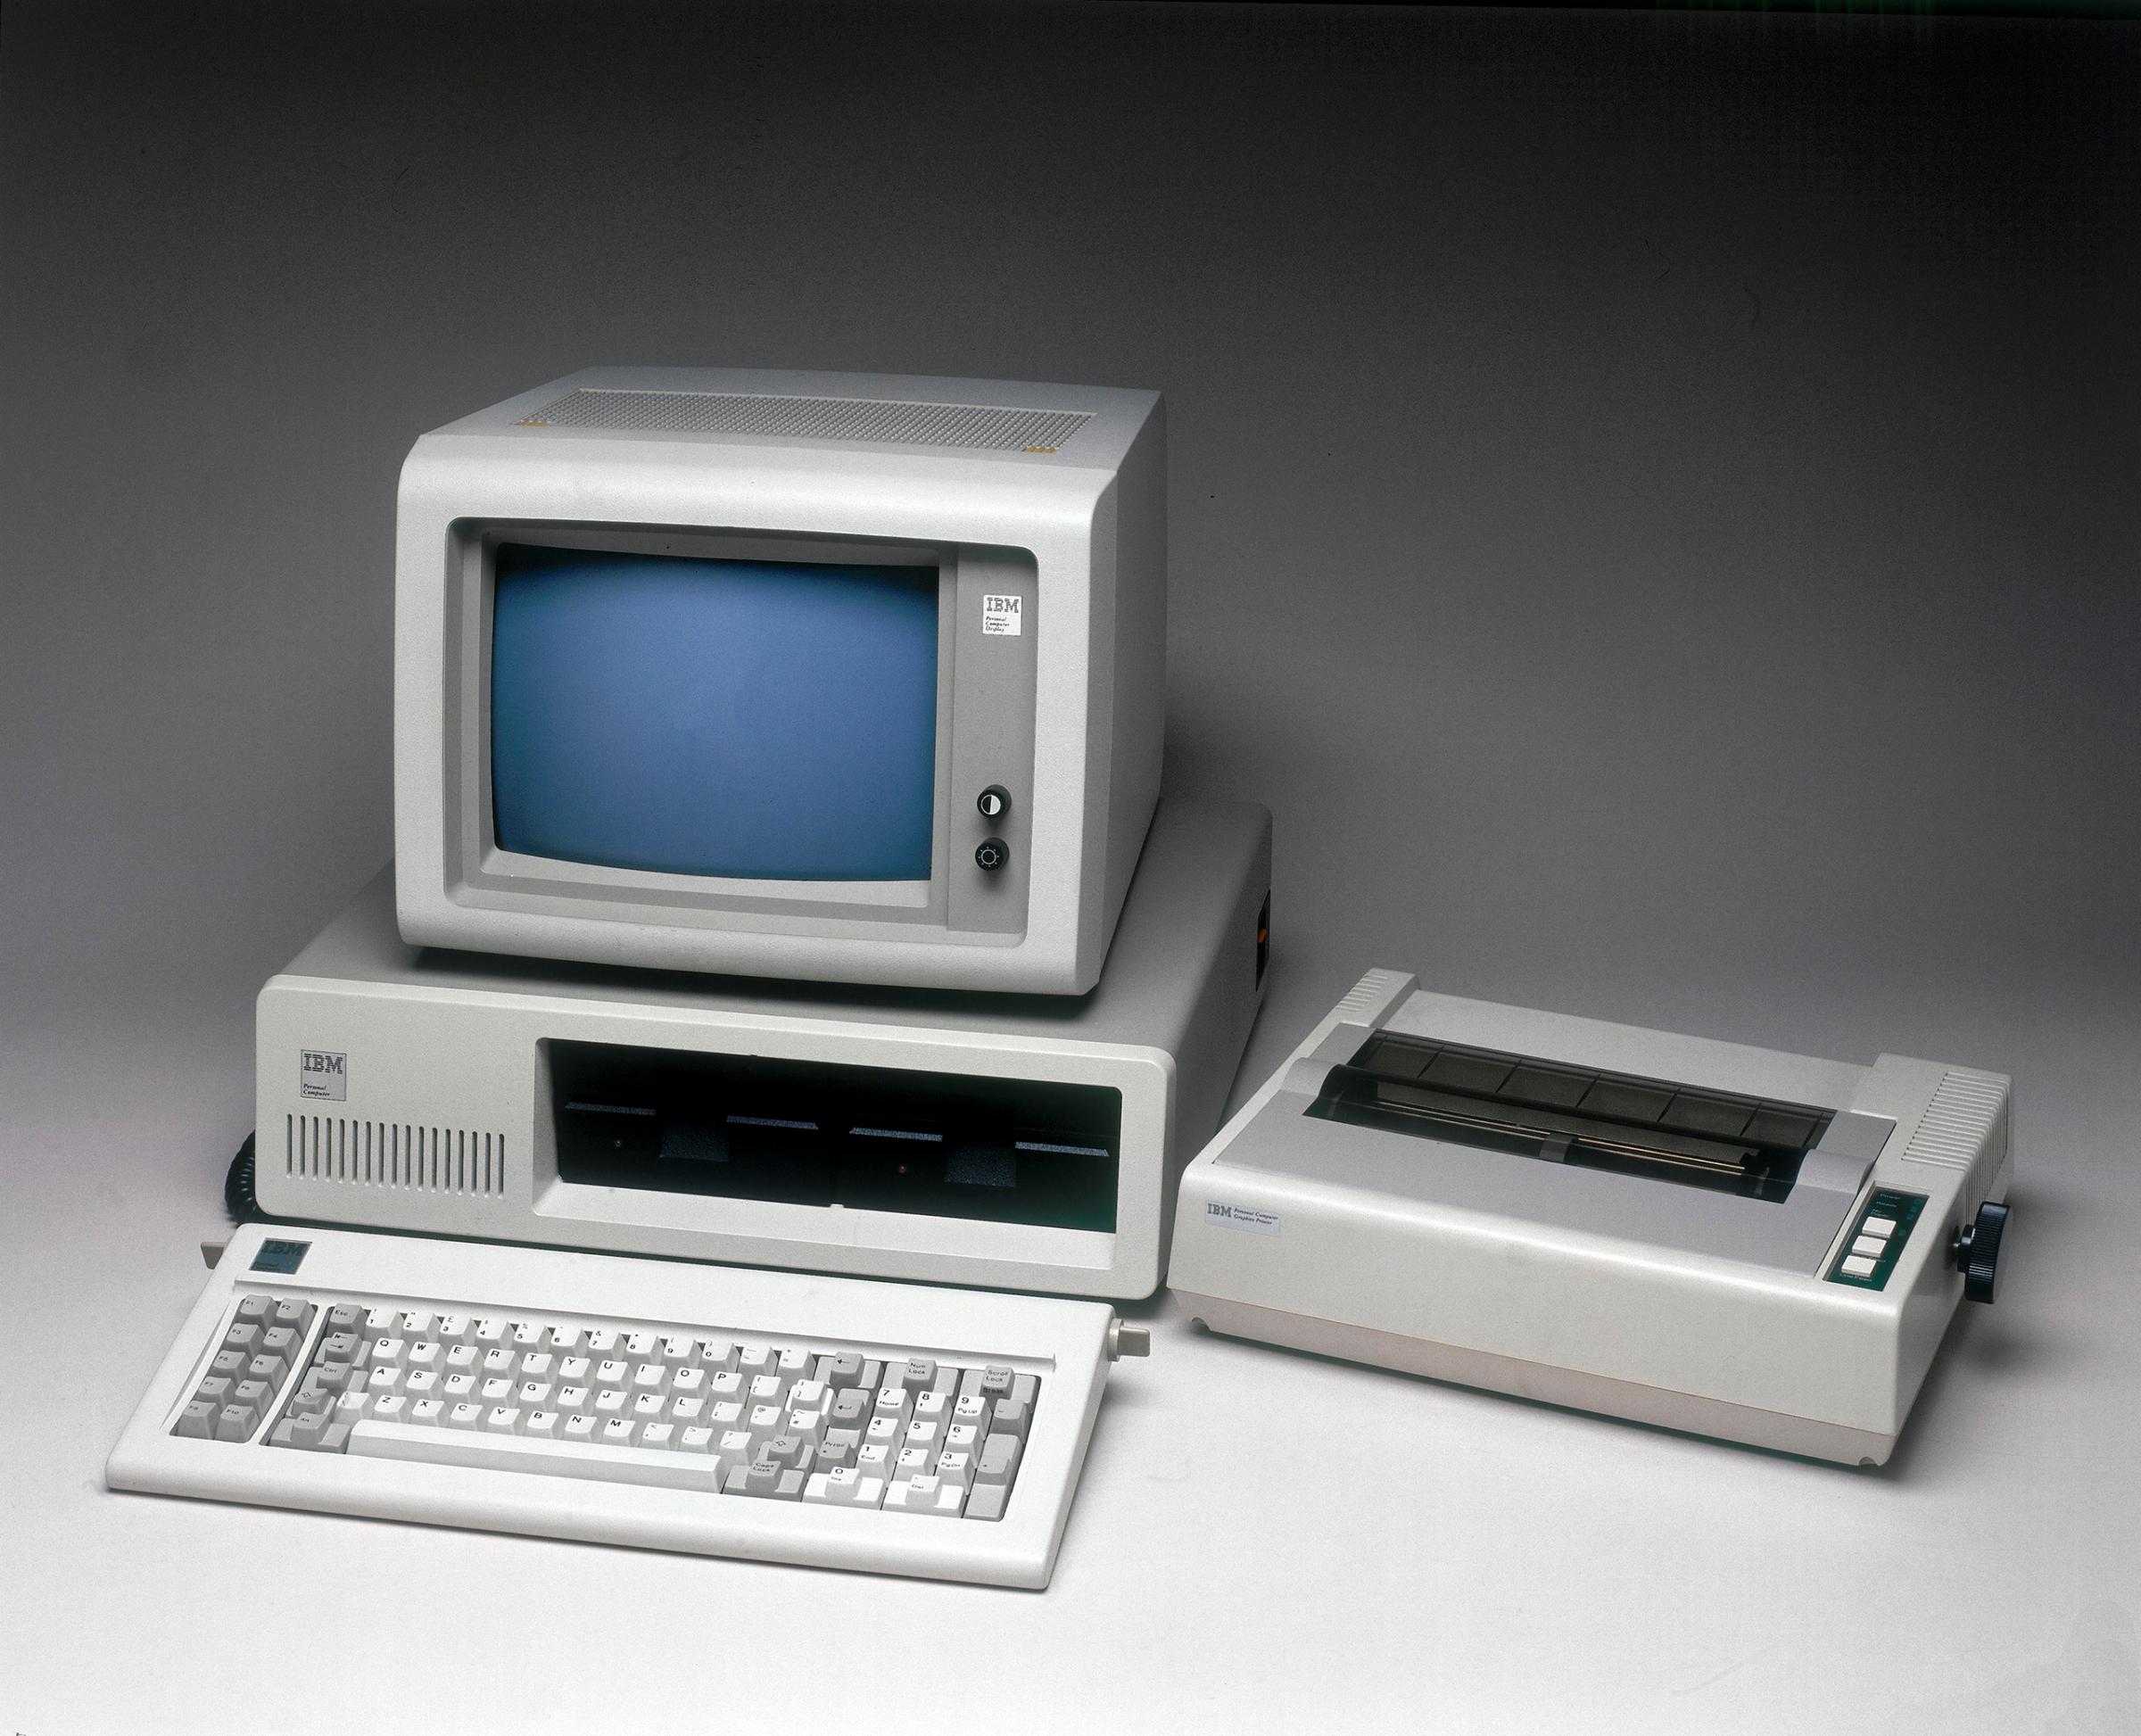 IBM PC Model 5150 with printer, 1981.